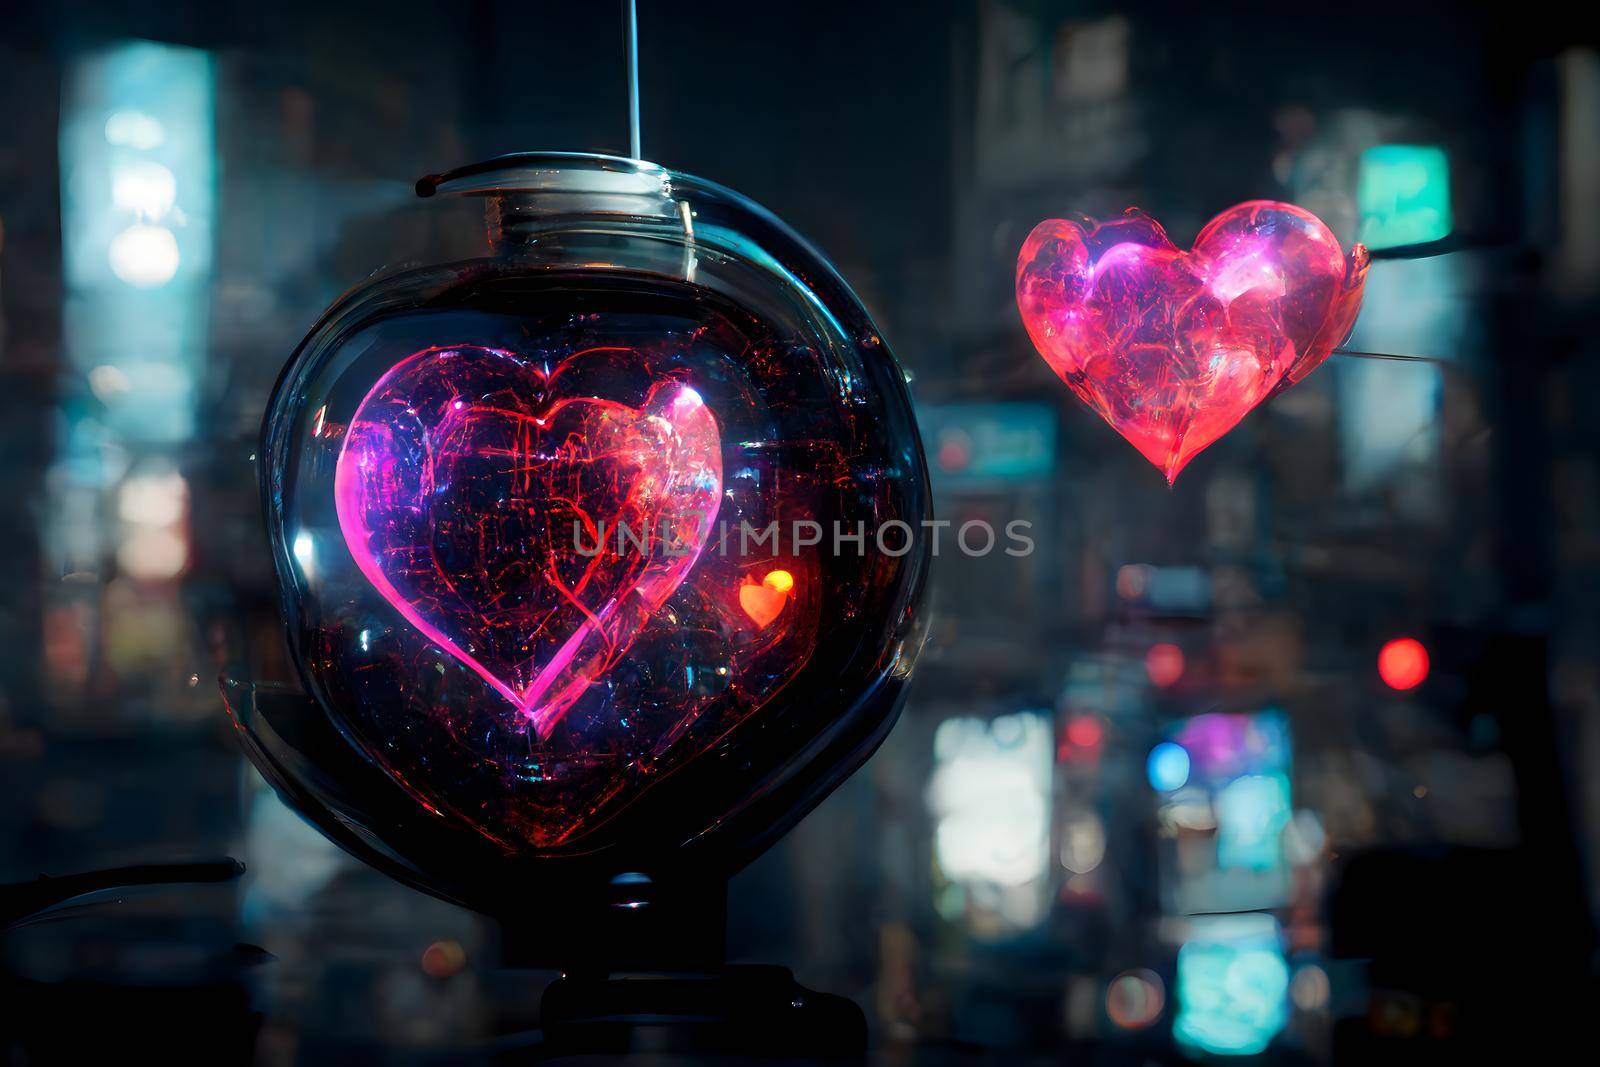 cyberpunk neon high-tech heart in night city environment, neural network generated art painting by z1b